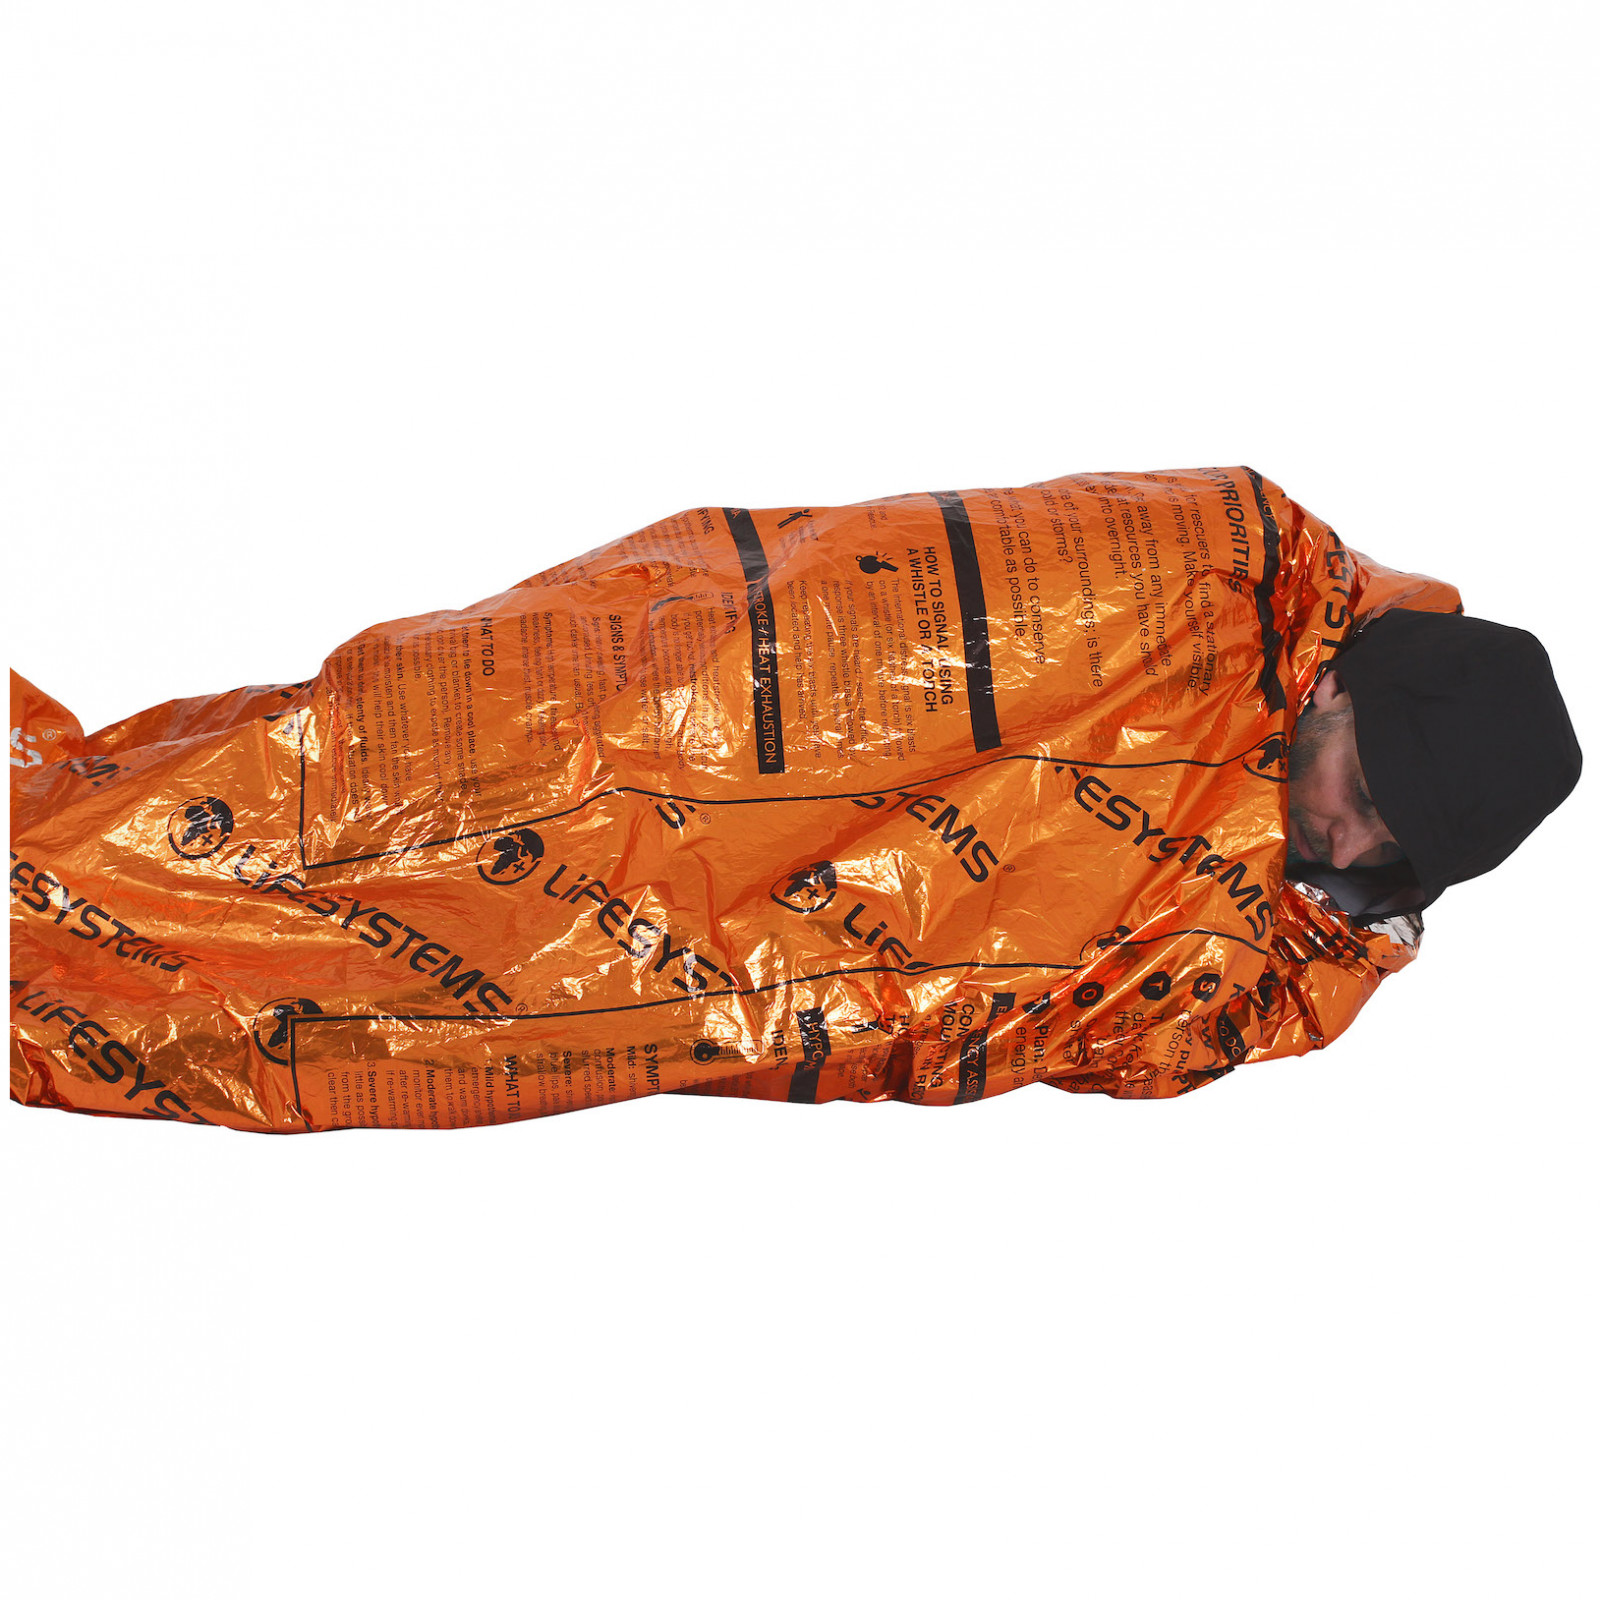 Izotermická fólie Lifesystems Heatshield Blanket - Single Barva: oranžová